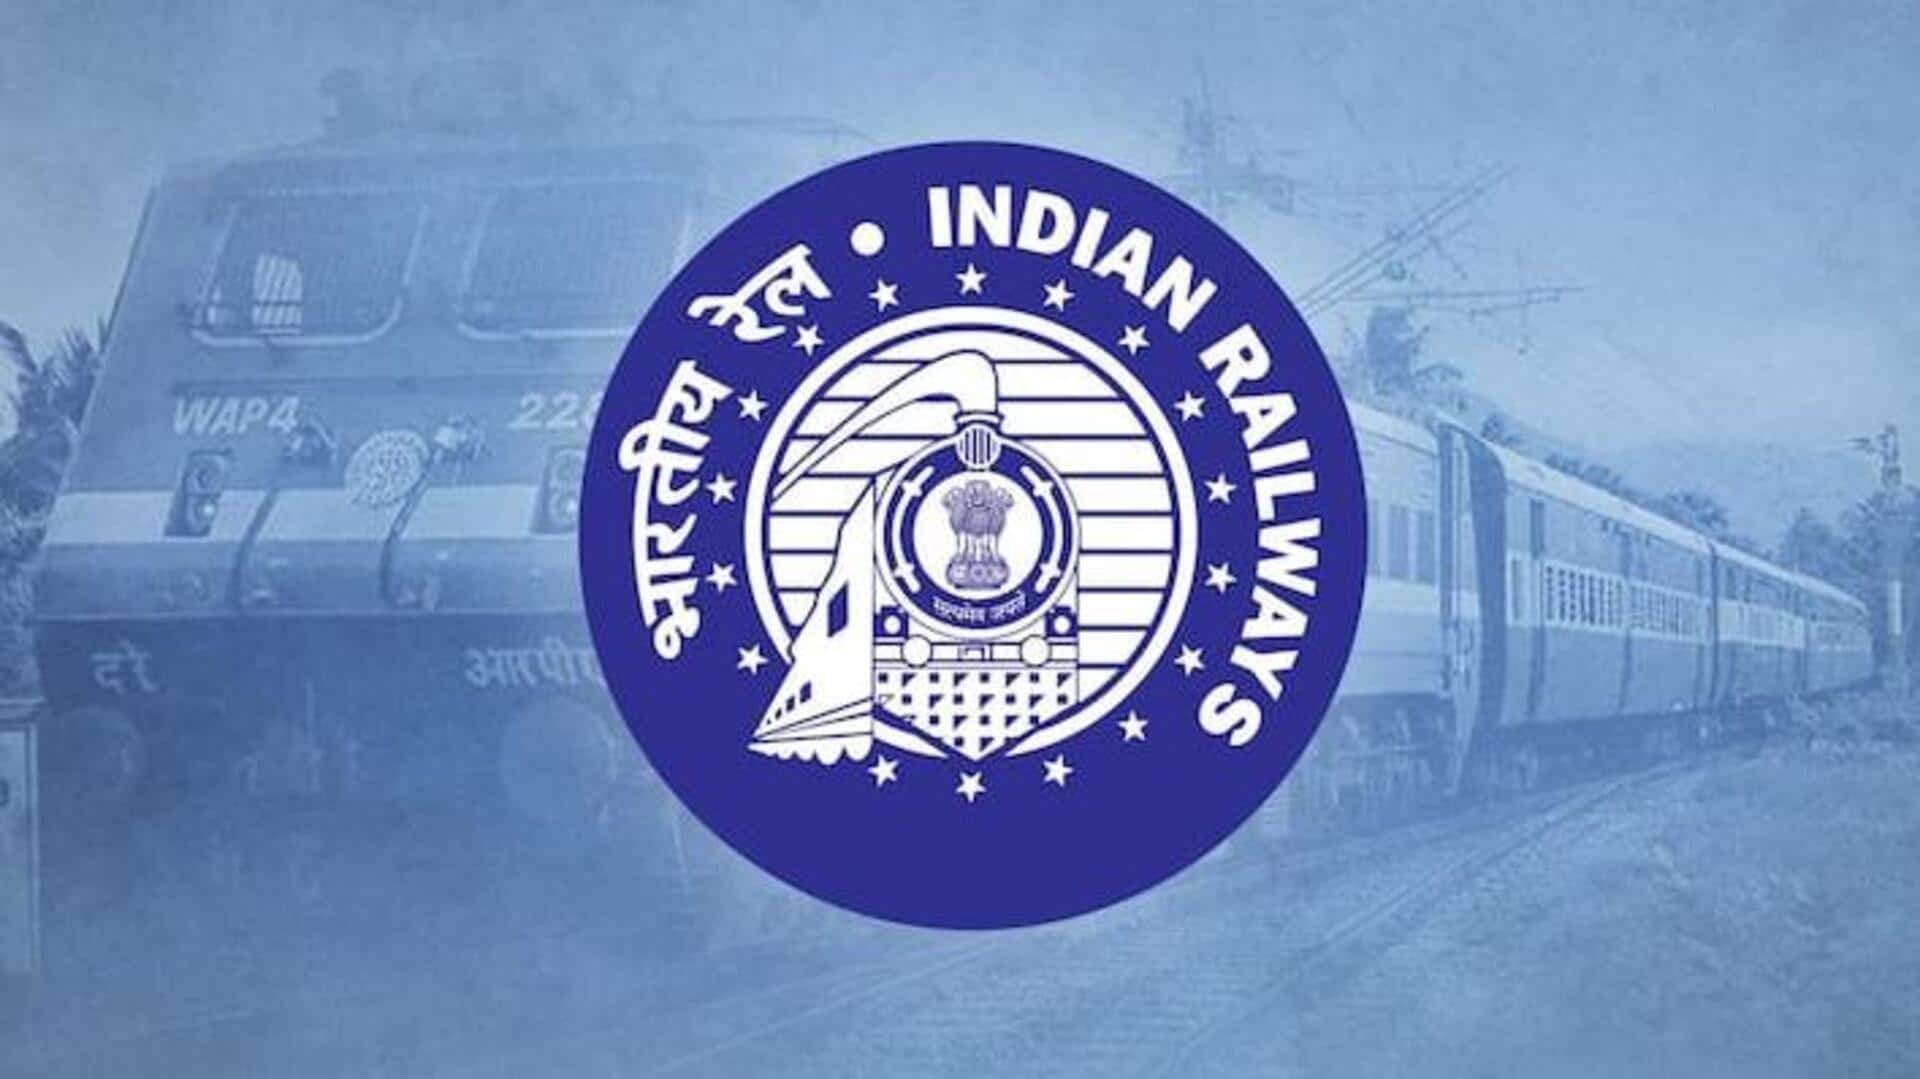 Indian Railways- highest Record-Trips: ఏప్రిల్‌లో అత్యధిక ప్రయాణీకుల సంఖ్యను నమోదు చేసిన భారతీయ రైల్వే